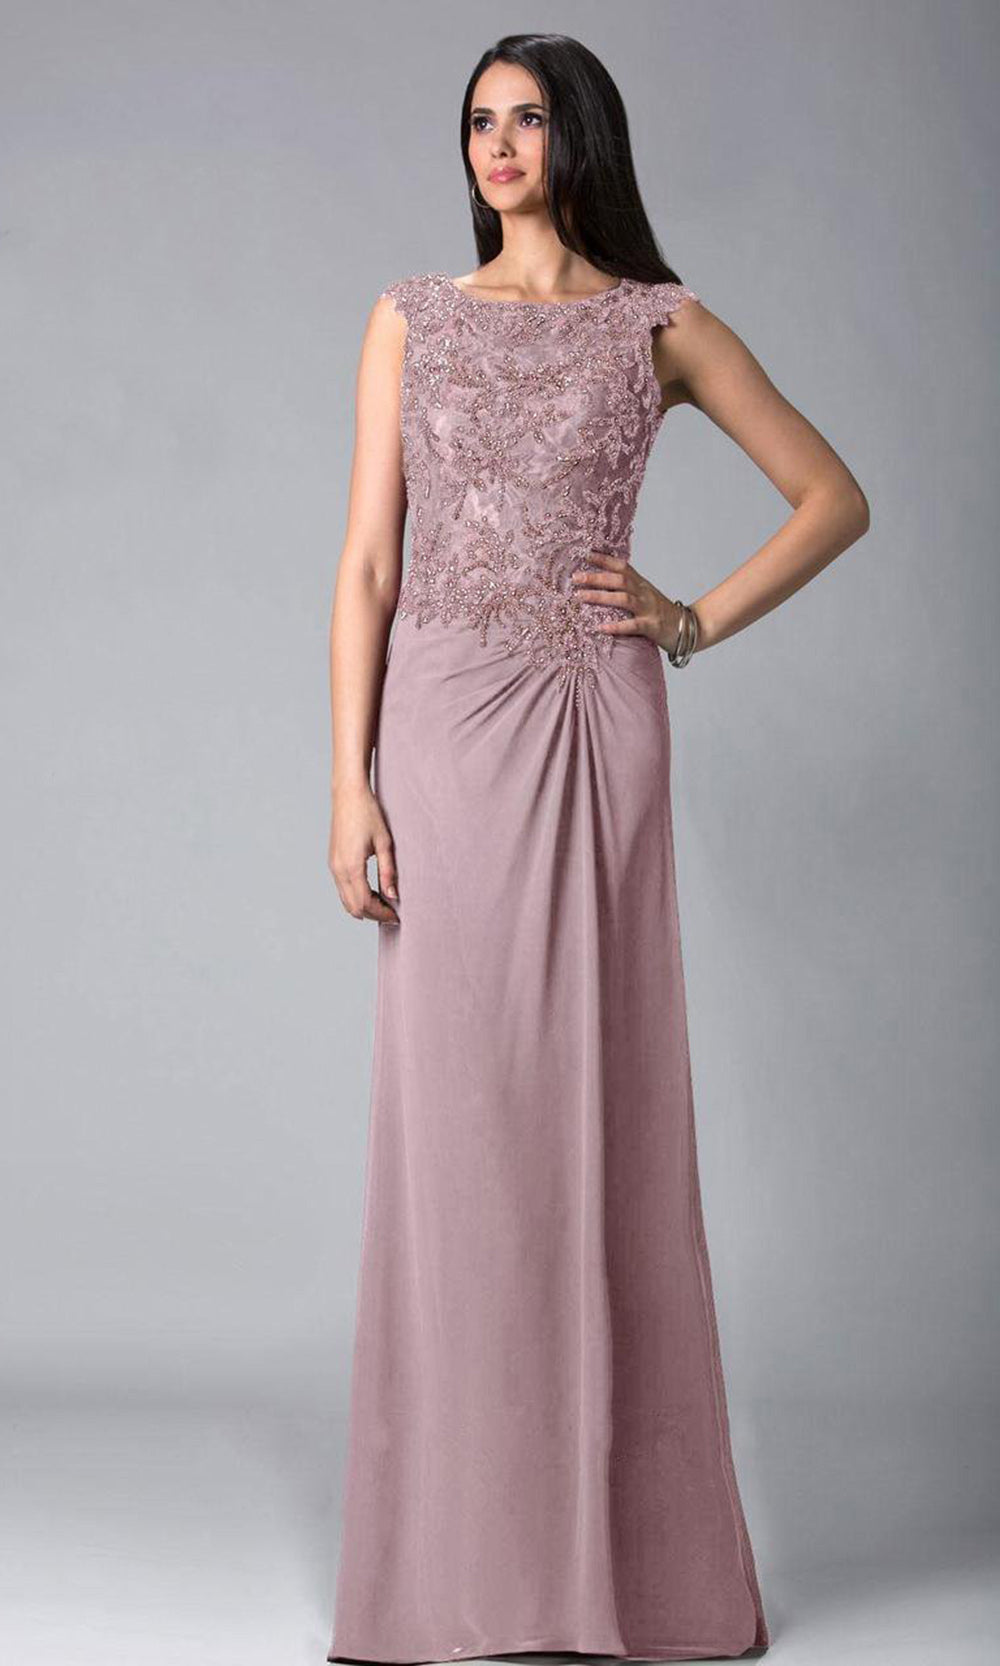 Feriani Couture - Cap Sleeve Lace Appliqued Column Gown 18402 CCSALE 16 / Rose